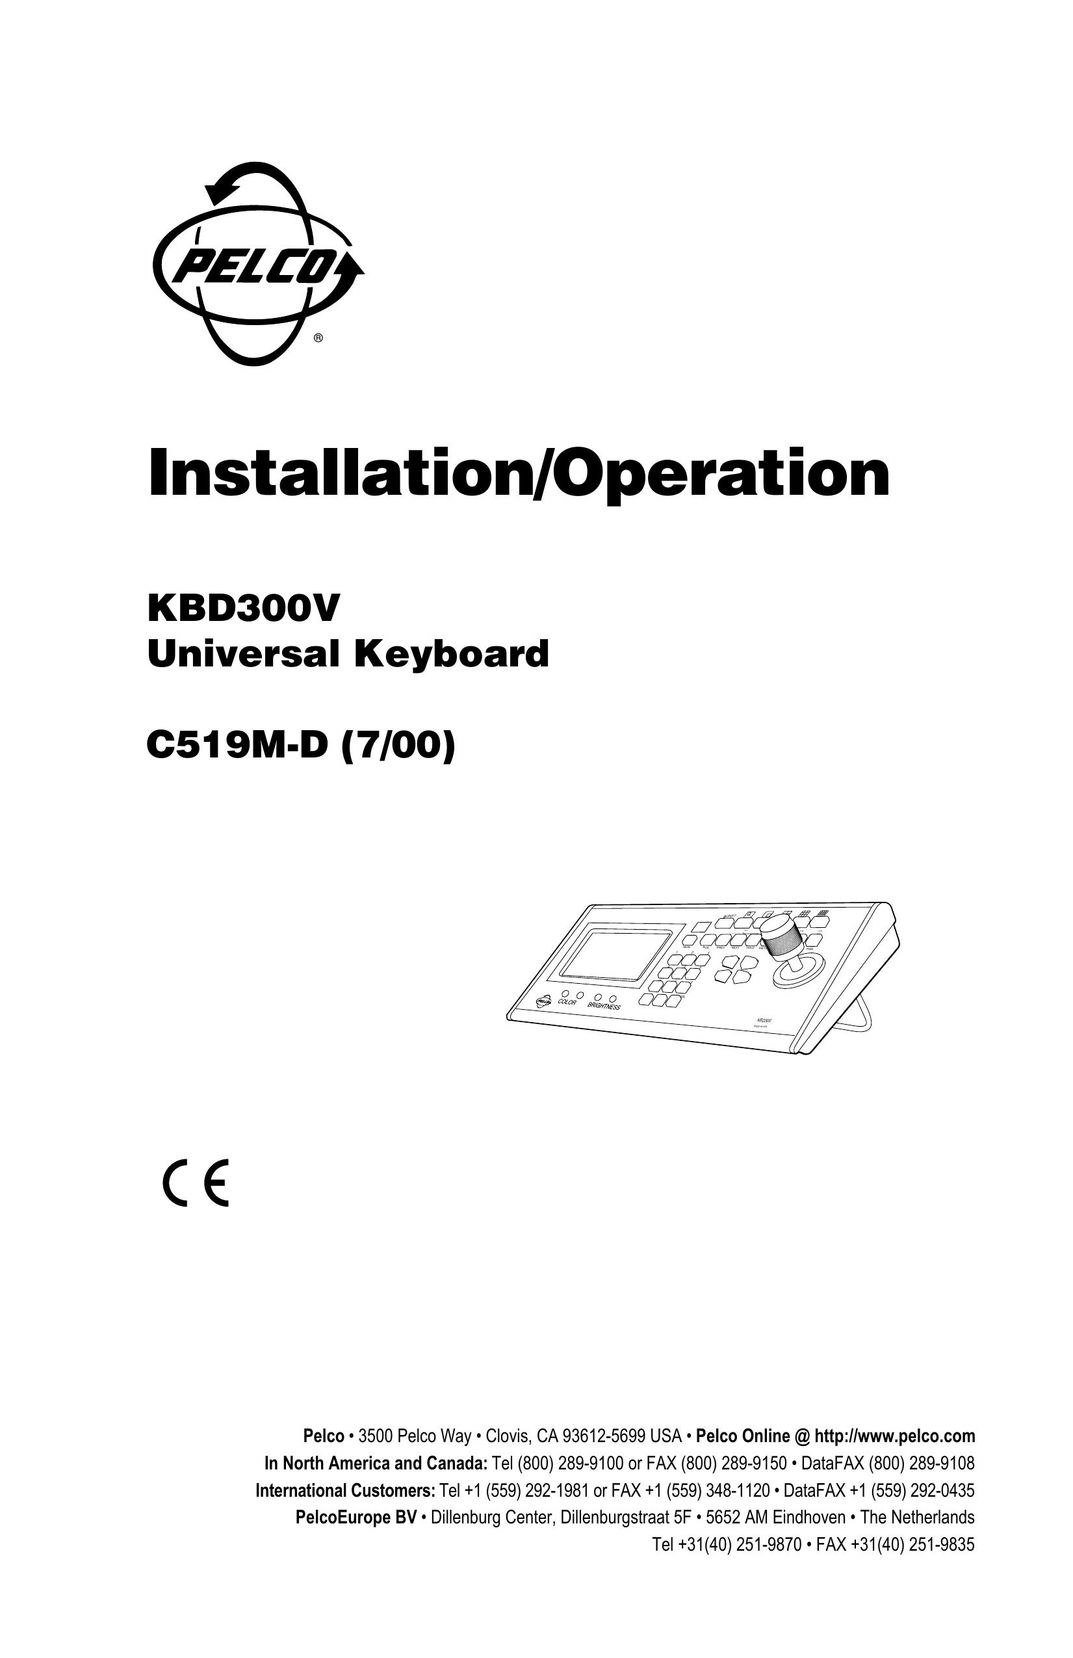 Pelco KBD300V Video Game Keyboard User Manual